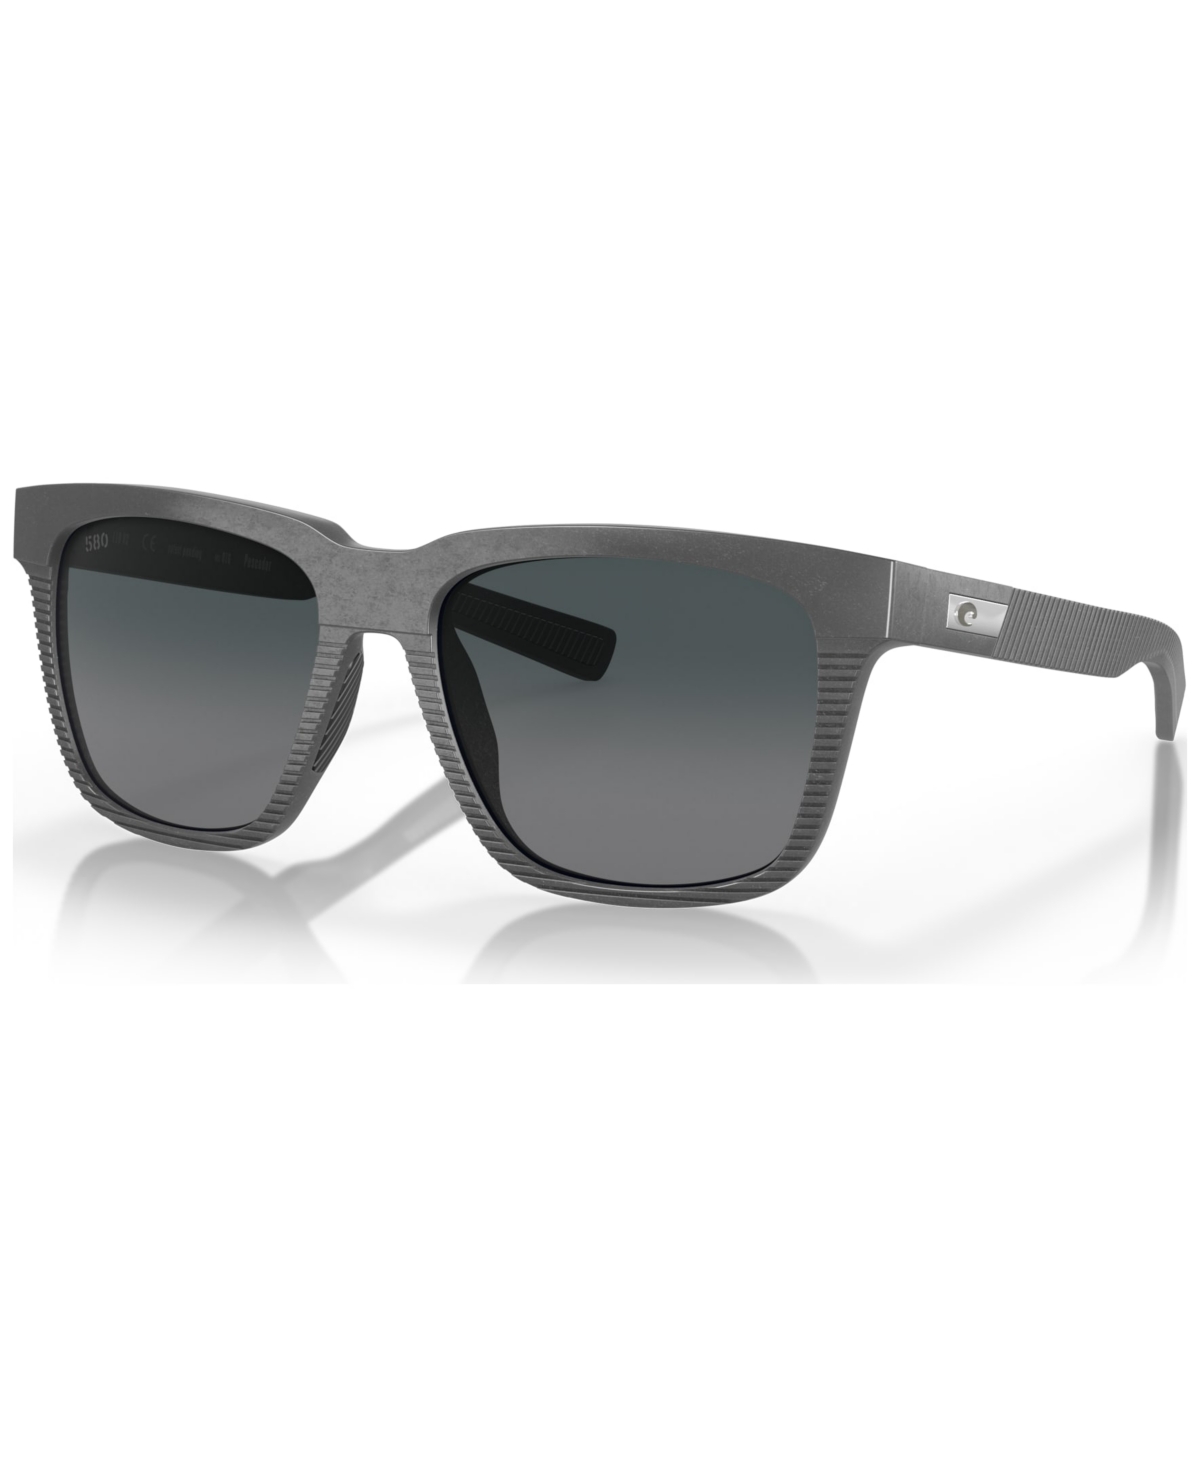 Men's Polarized Sunglasses, Pescador - Net Gray